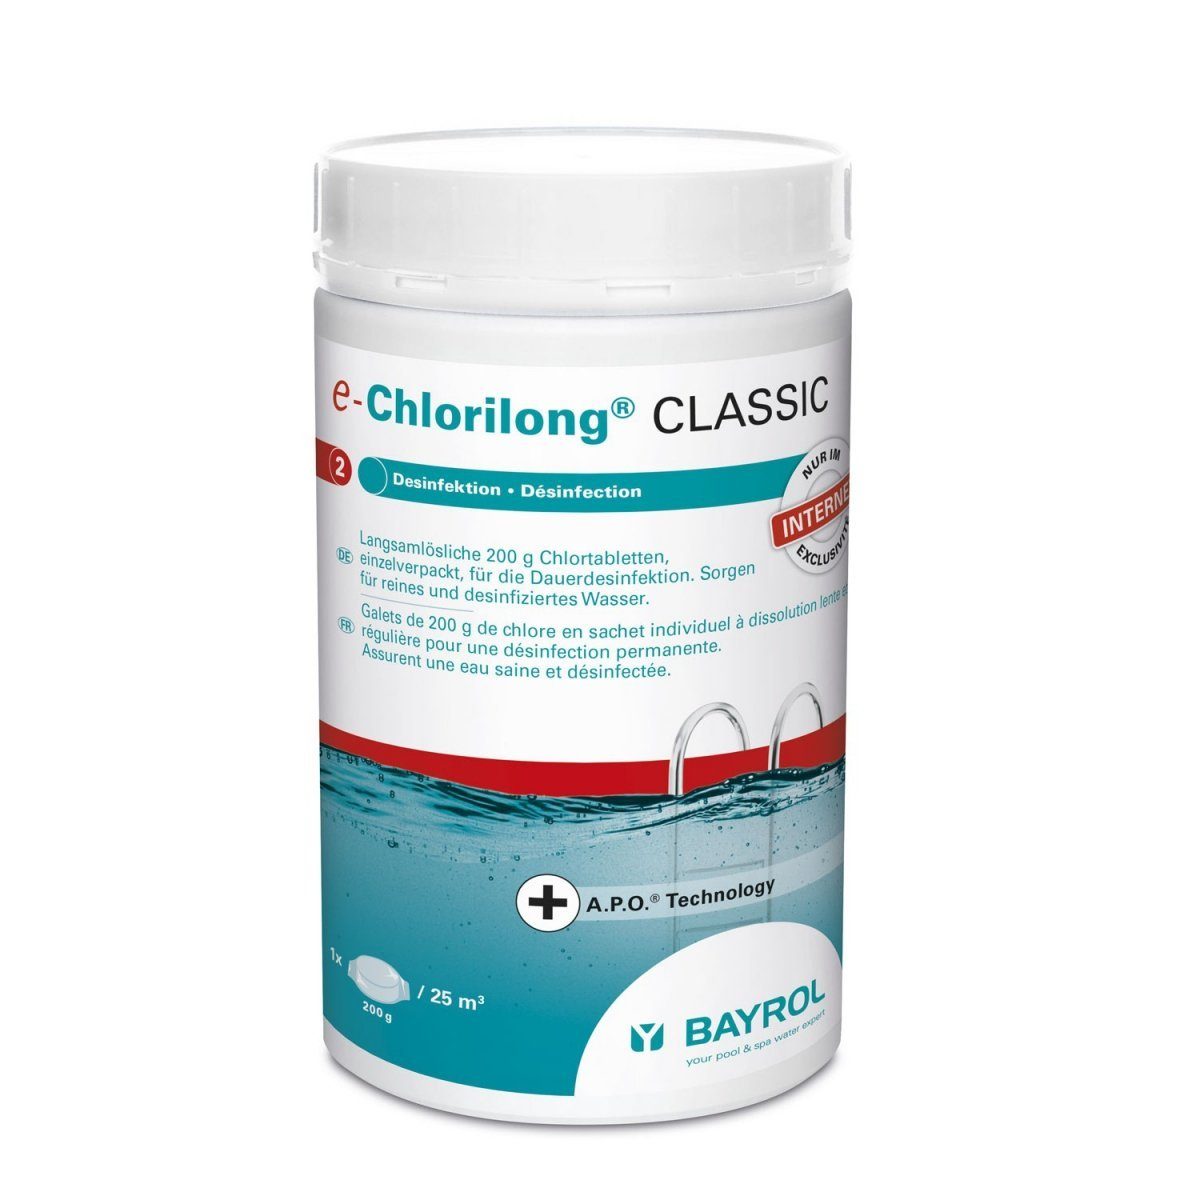 Bayrol Poolpflege Bayrol e-Chlorilong CLASSIC 1kg 200g-Tabletten Desinfektion Aktivchlor